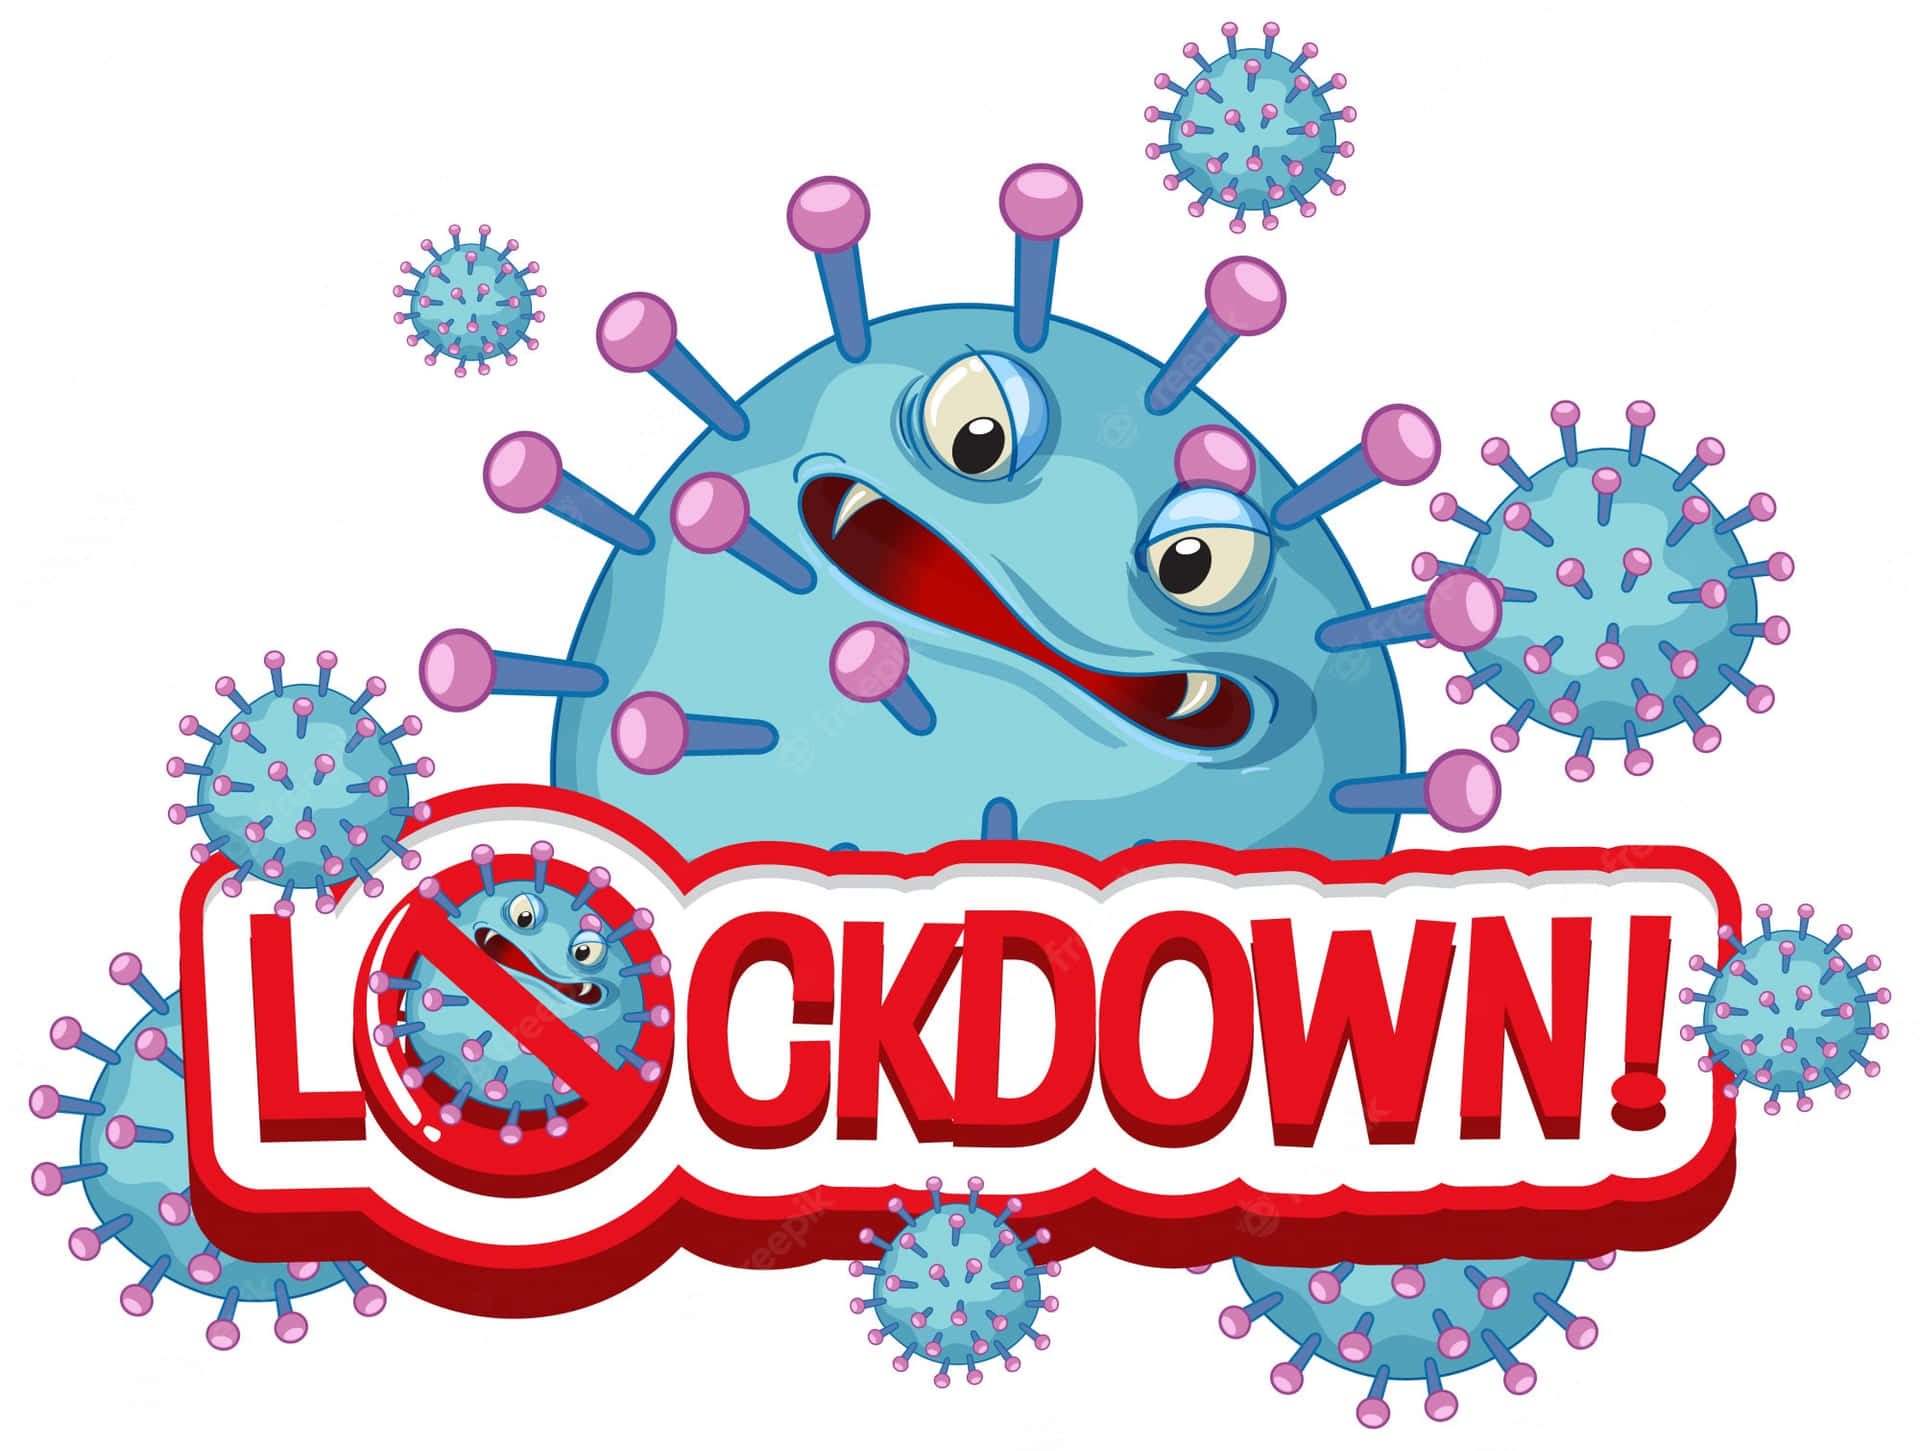 Lockdown Coronavirus Funny Drawing Wallpaper